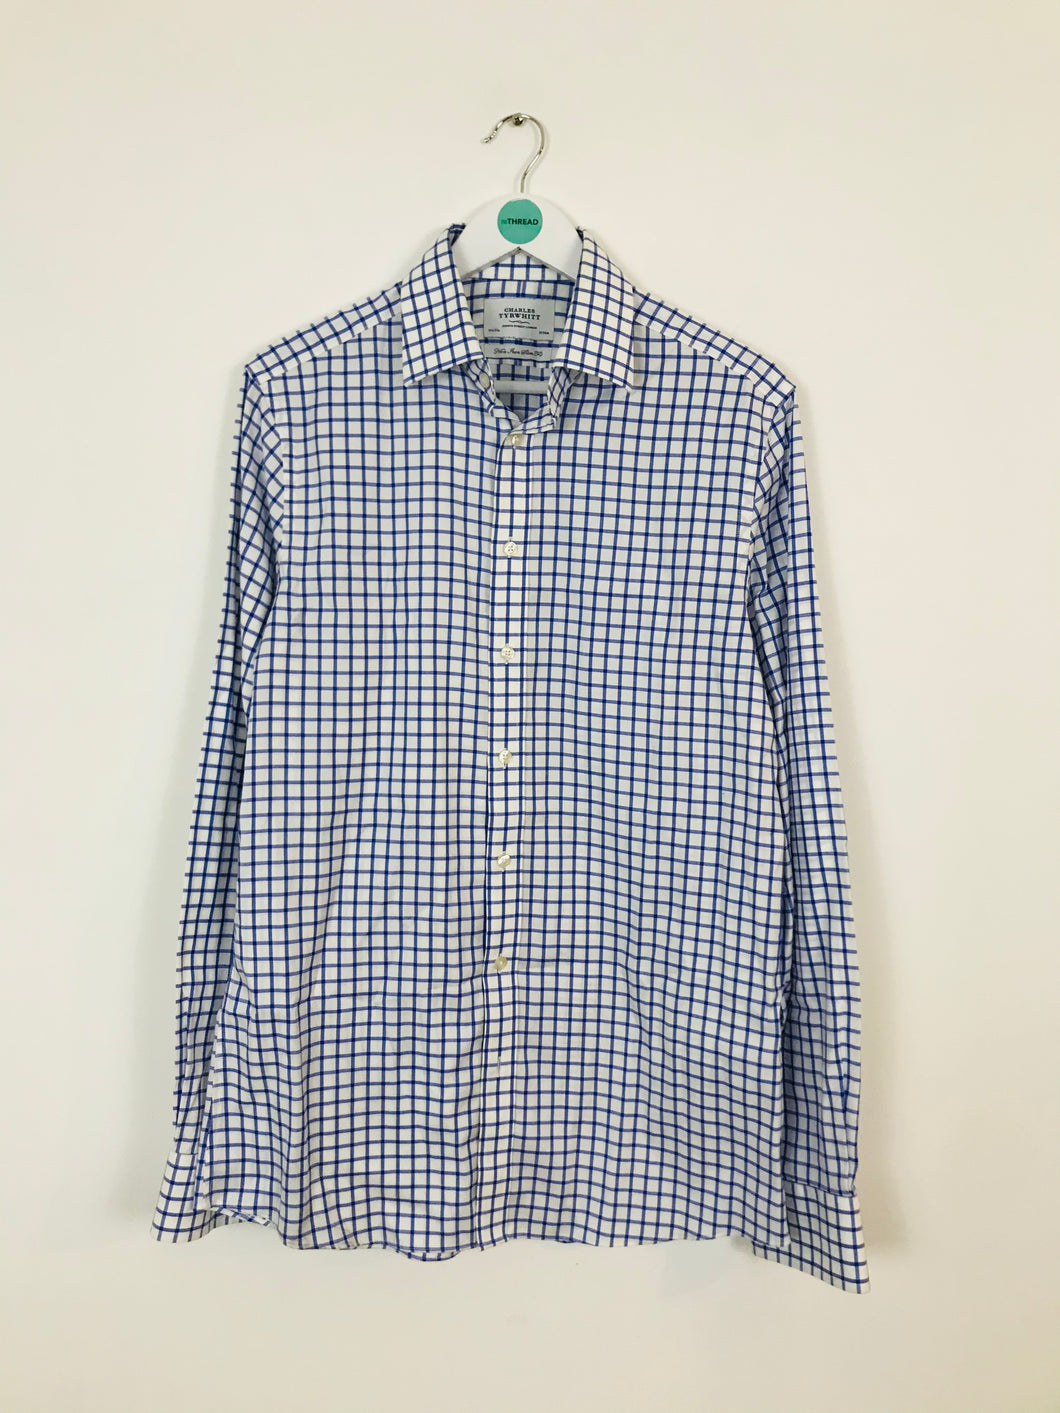 Charles Tyrwhitt Men’s Check Classic Shirt | 15.5/37” 39/94cm | Blue and white